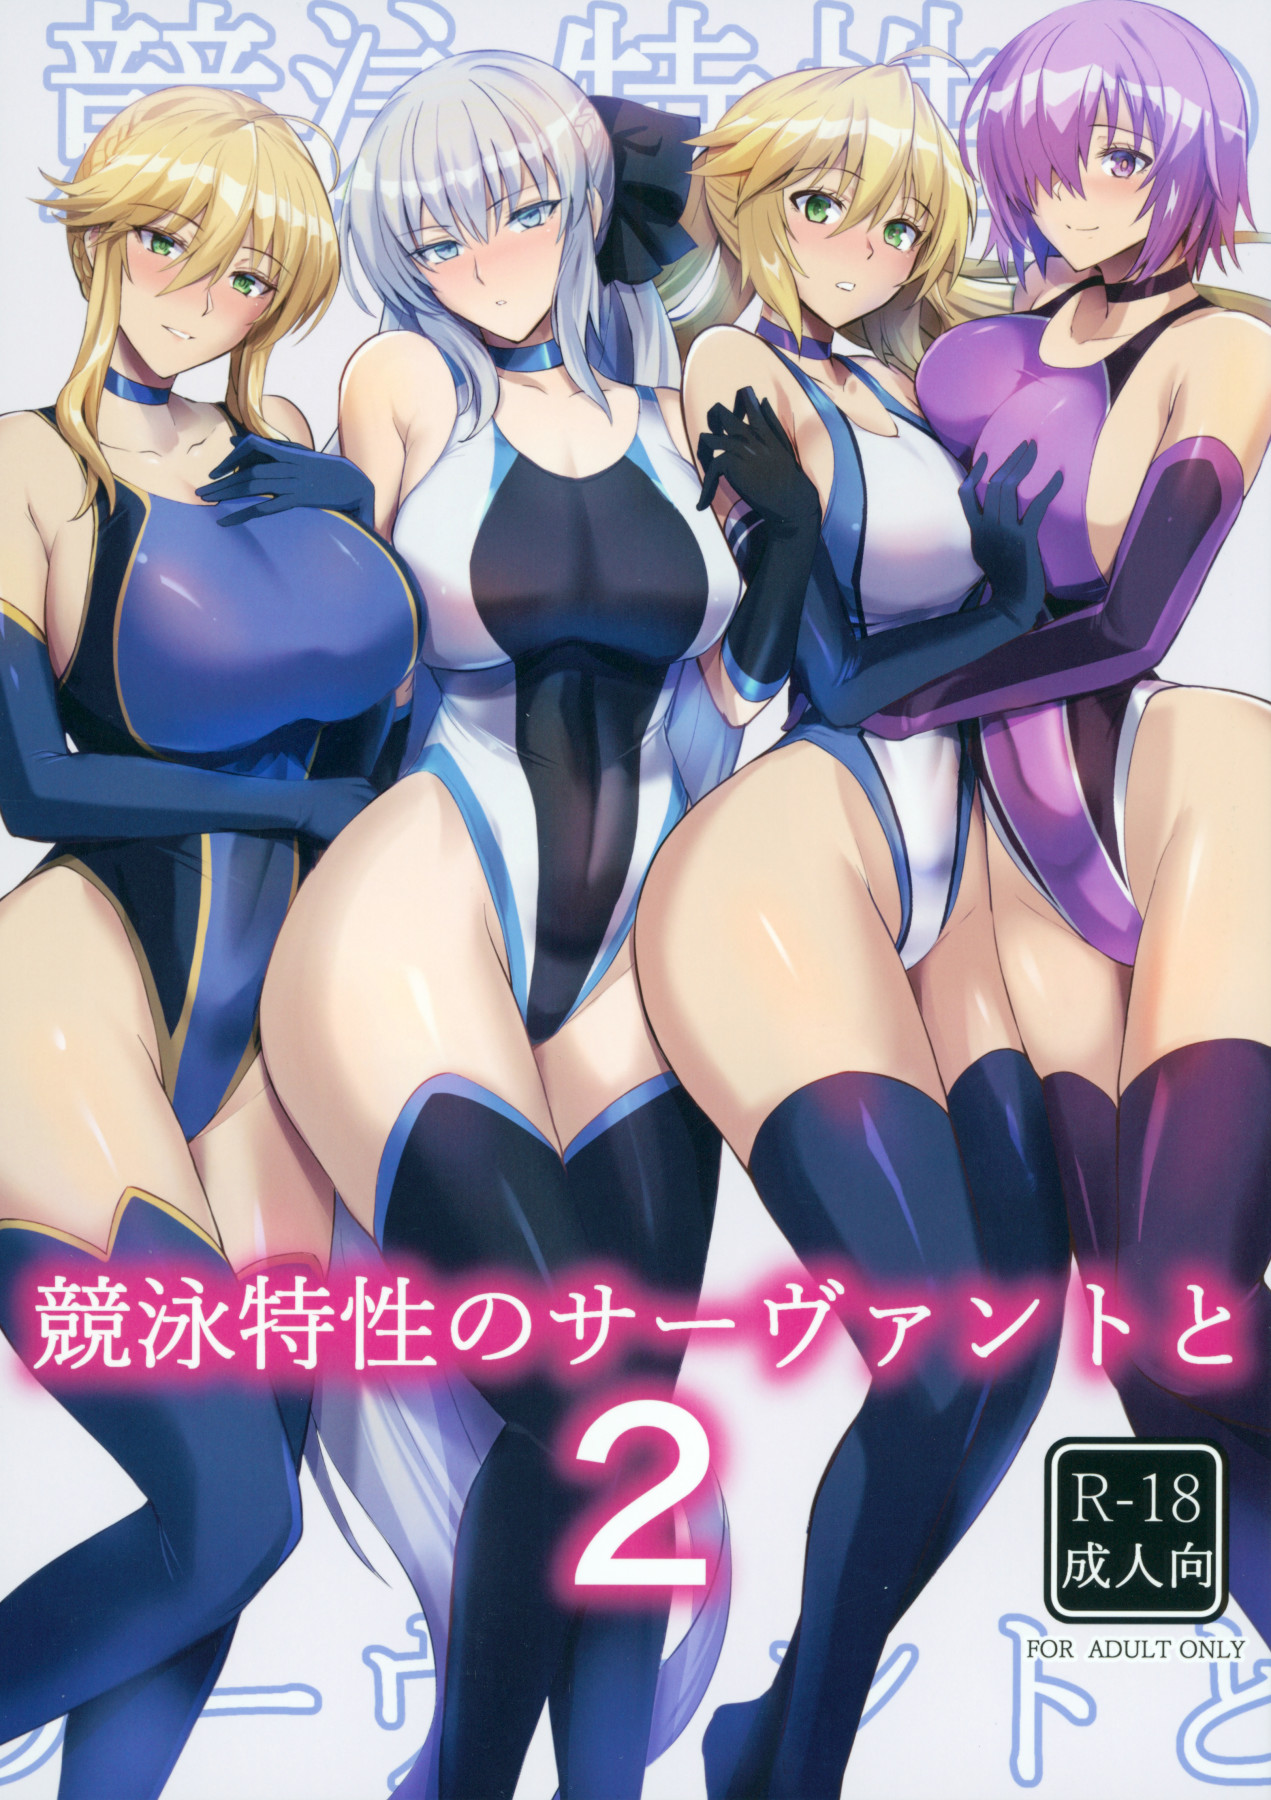 Hentai Manga Comic-Servants With The Swimsuit Trait 2-Read-1